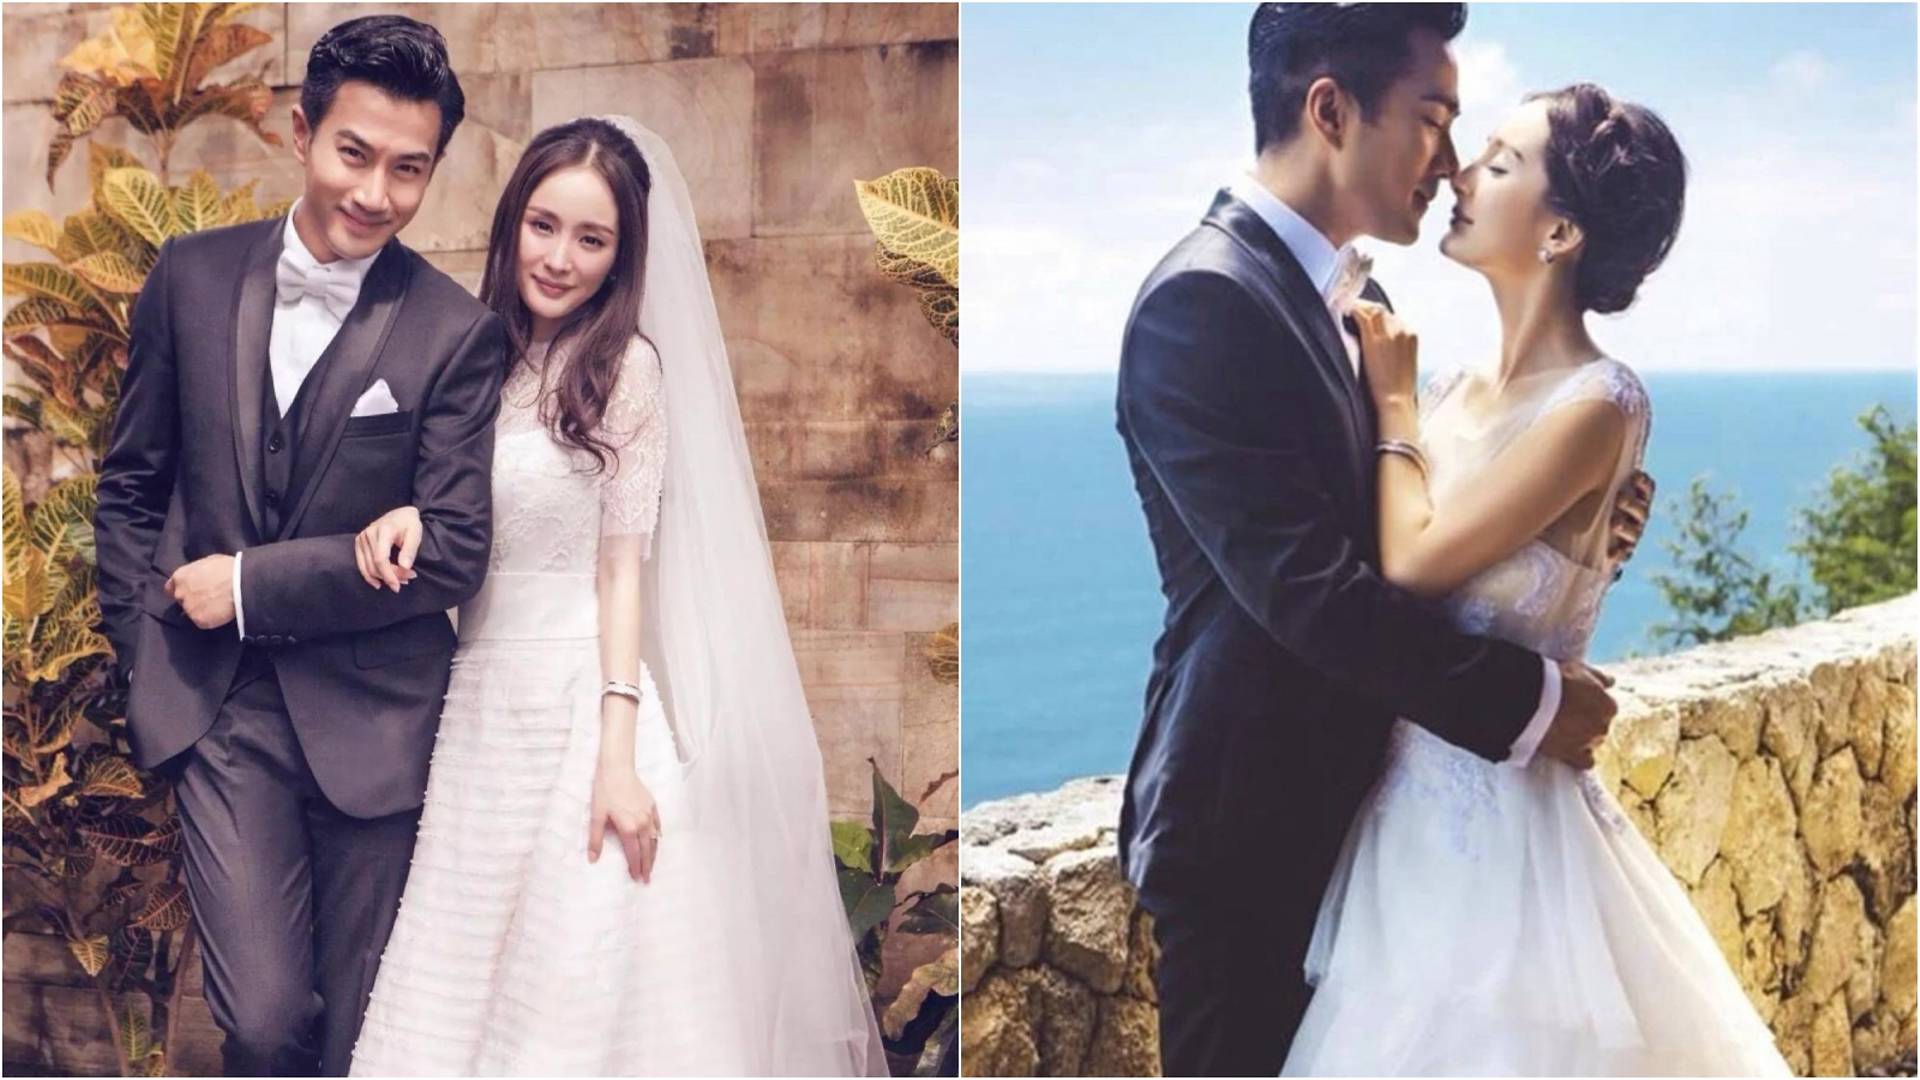 Hawick Lau, Yang Mi announce divorce